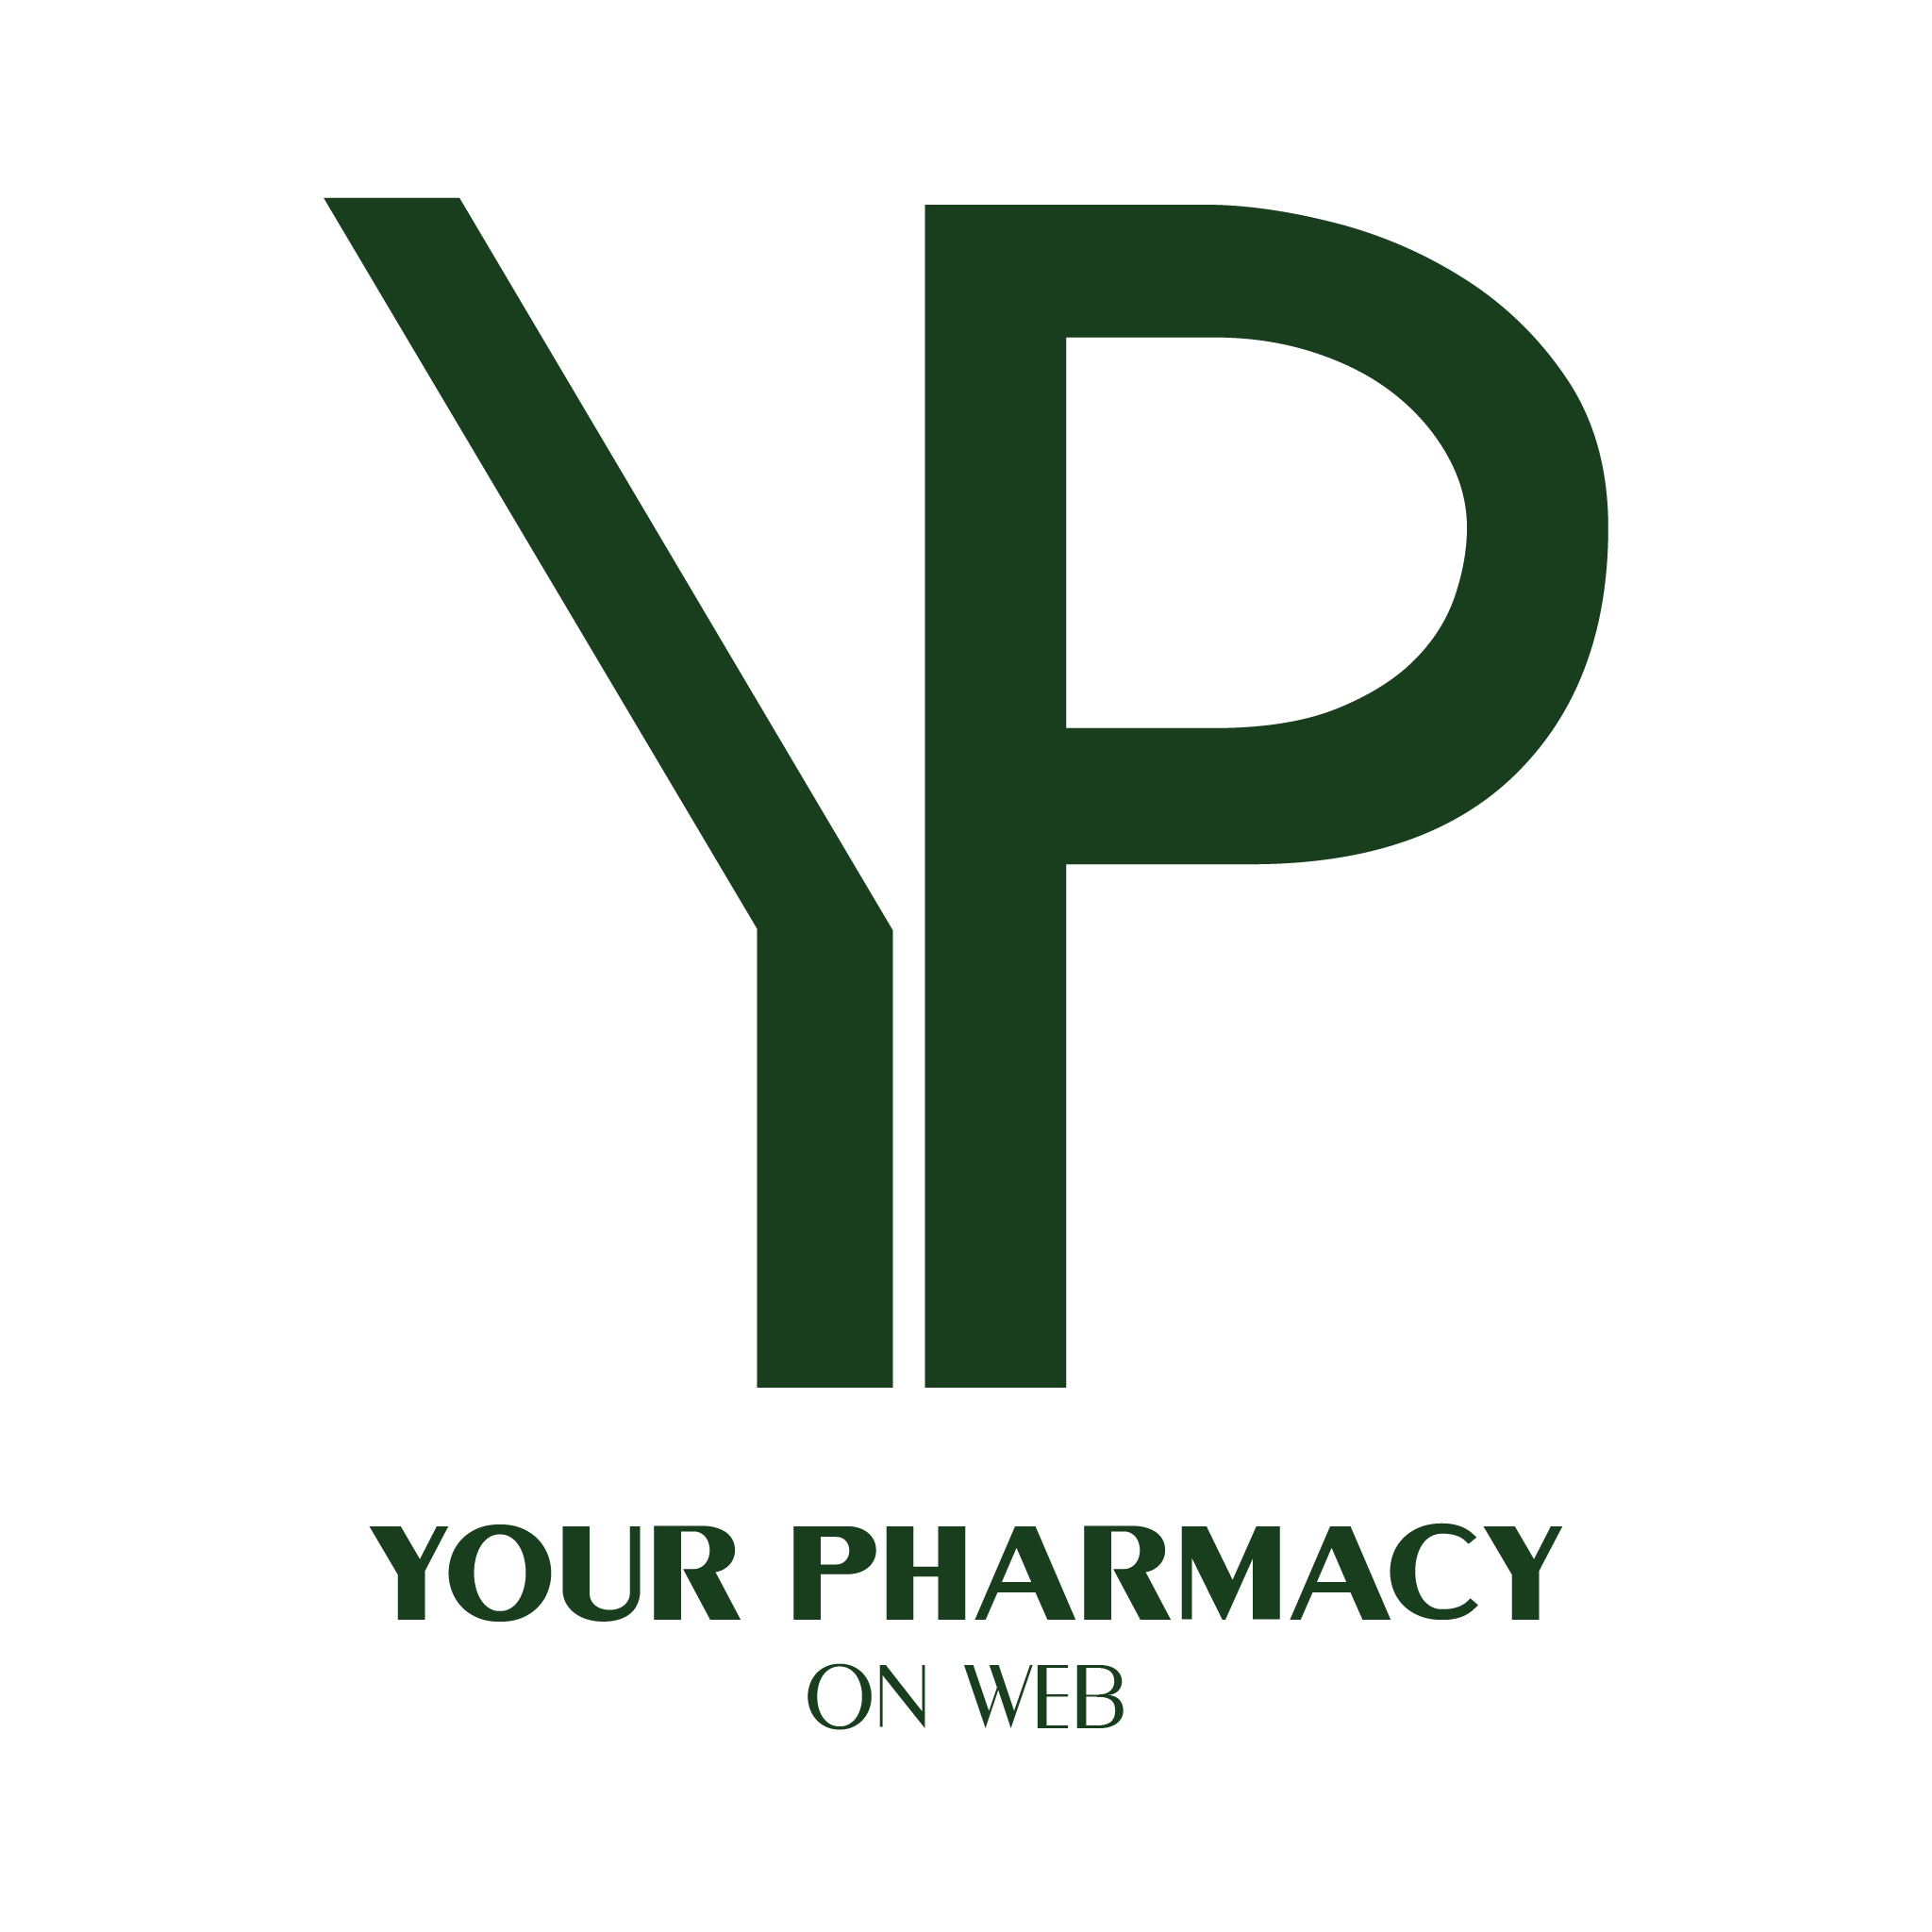 Your Pharmacy On Web